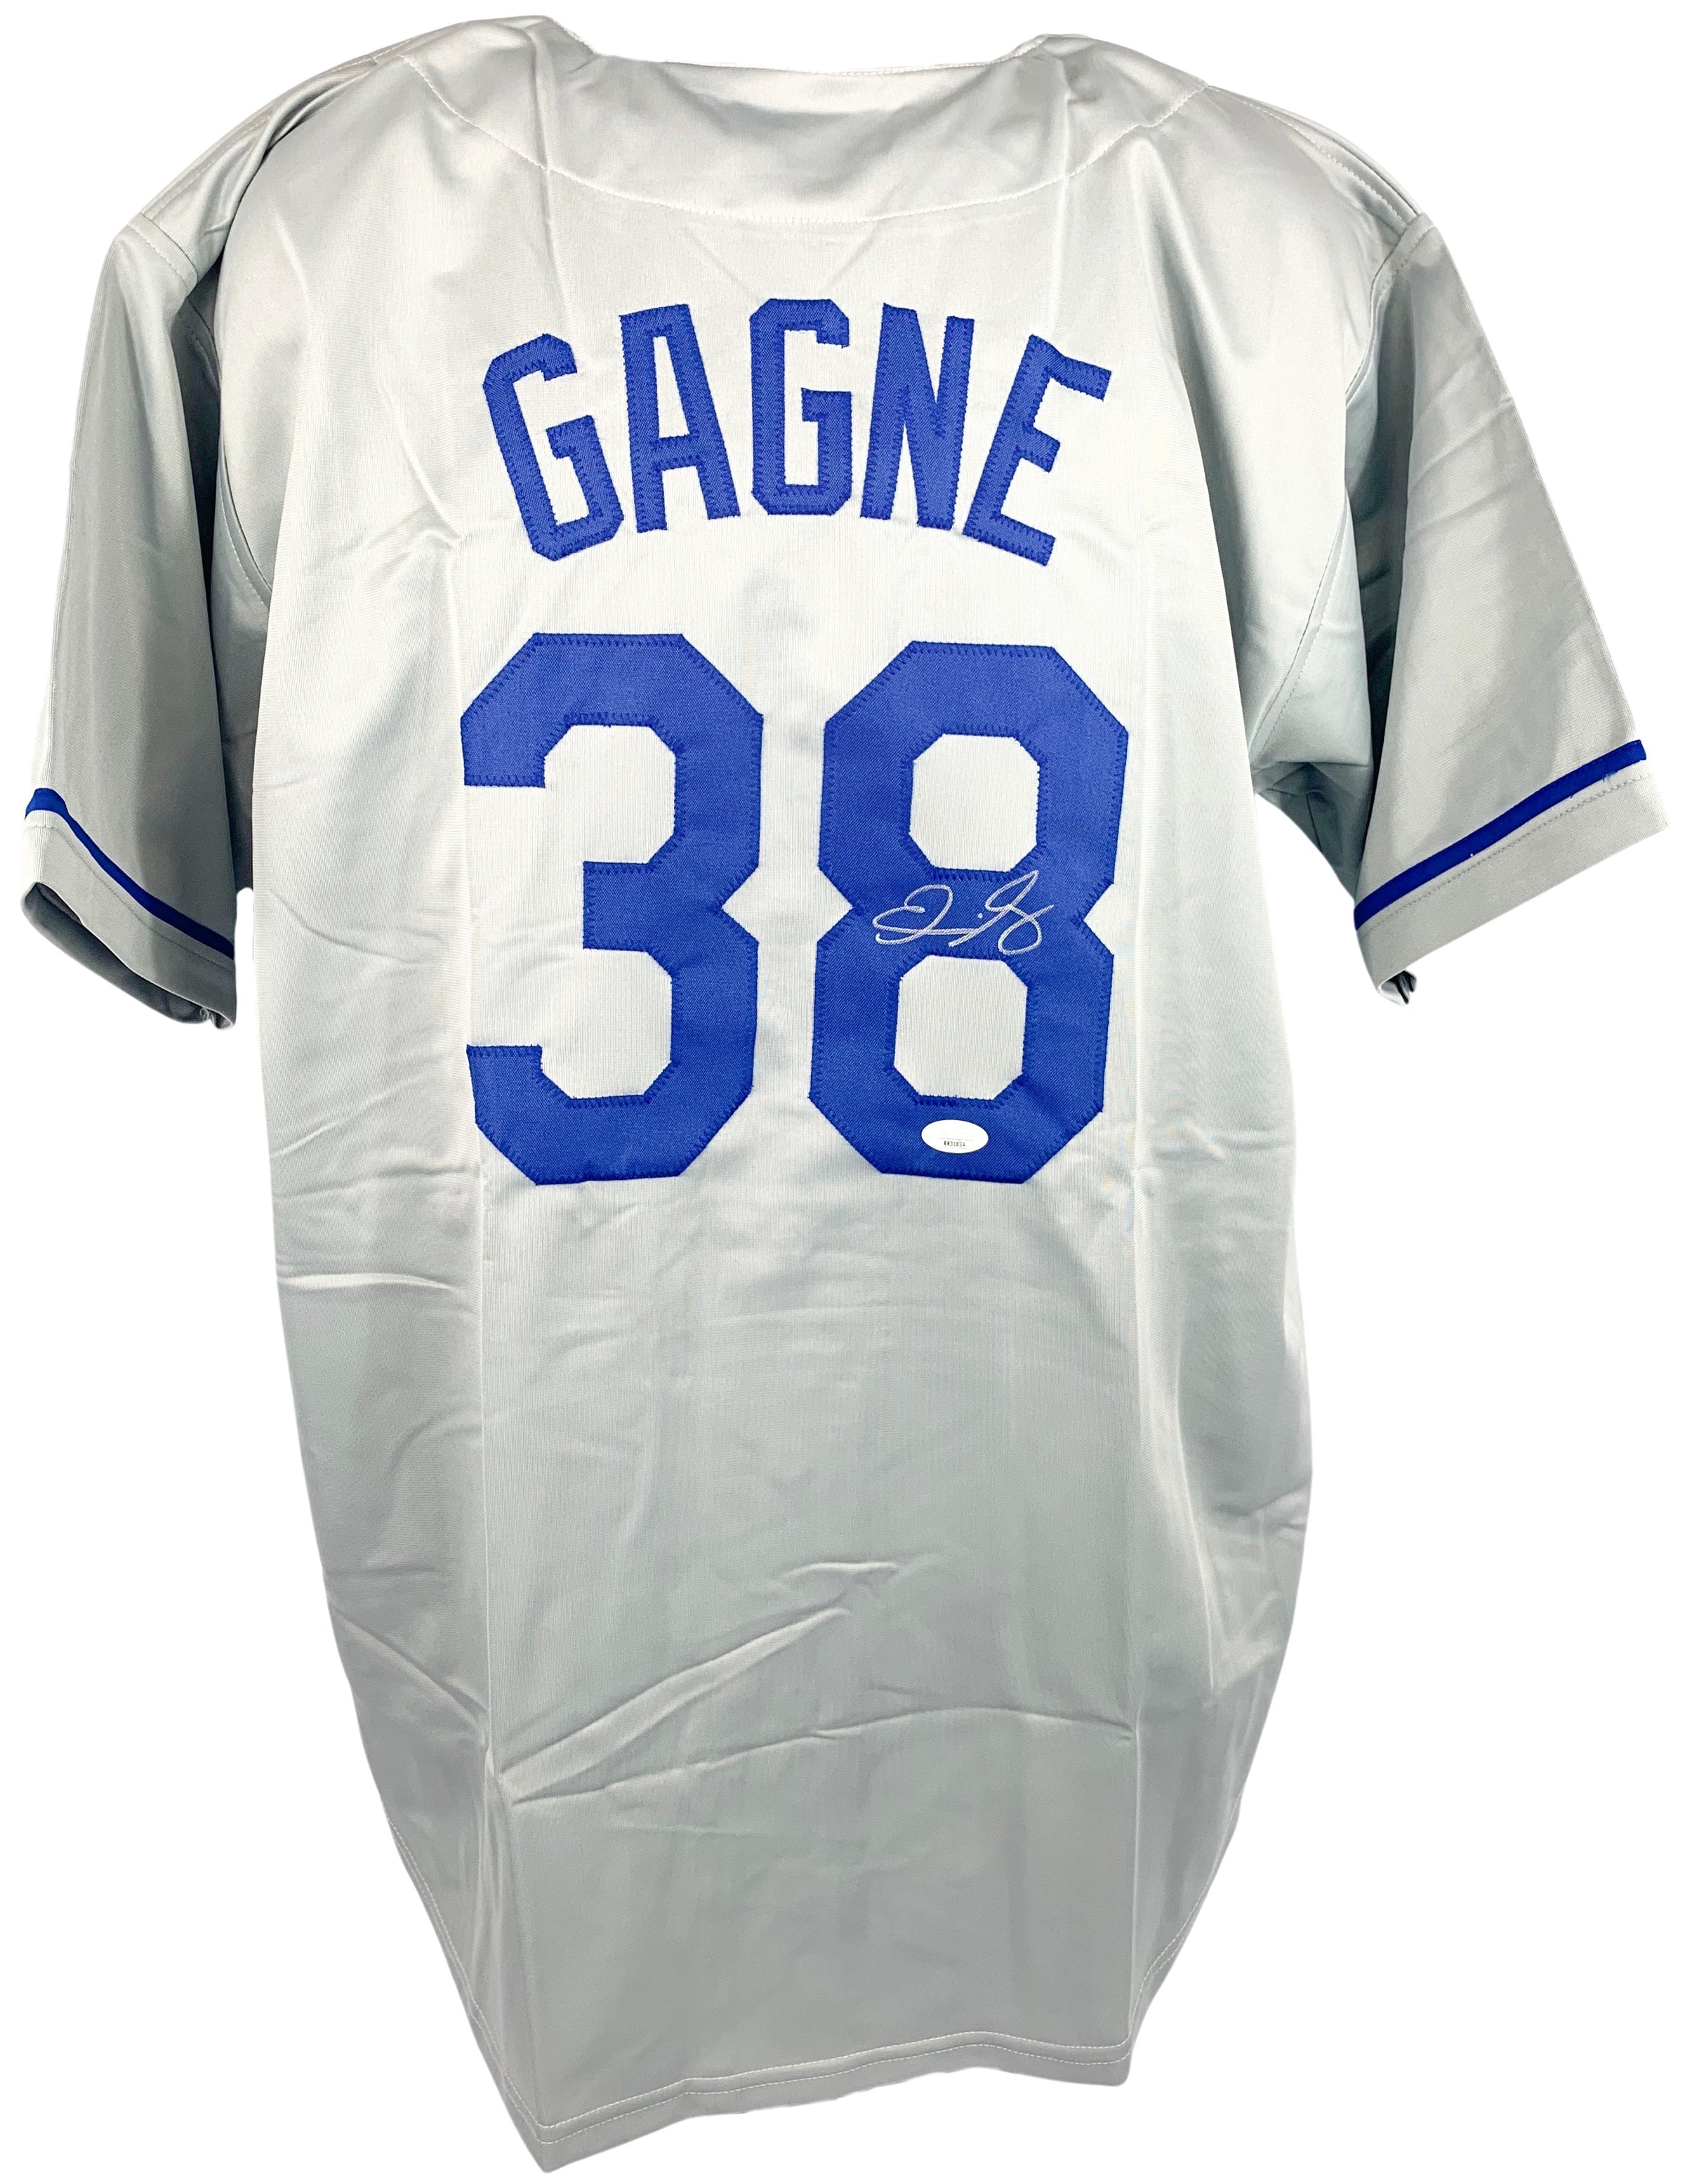 Eric Gagne autographed signed jersey MLB Los Angeles Dodgers JSA